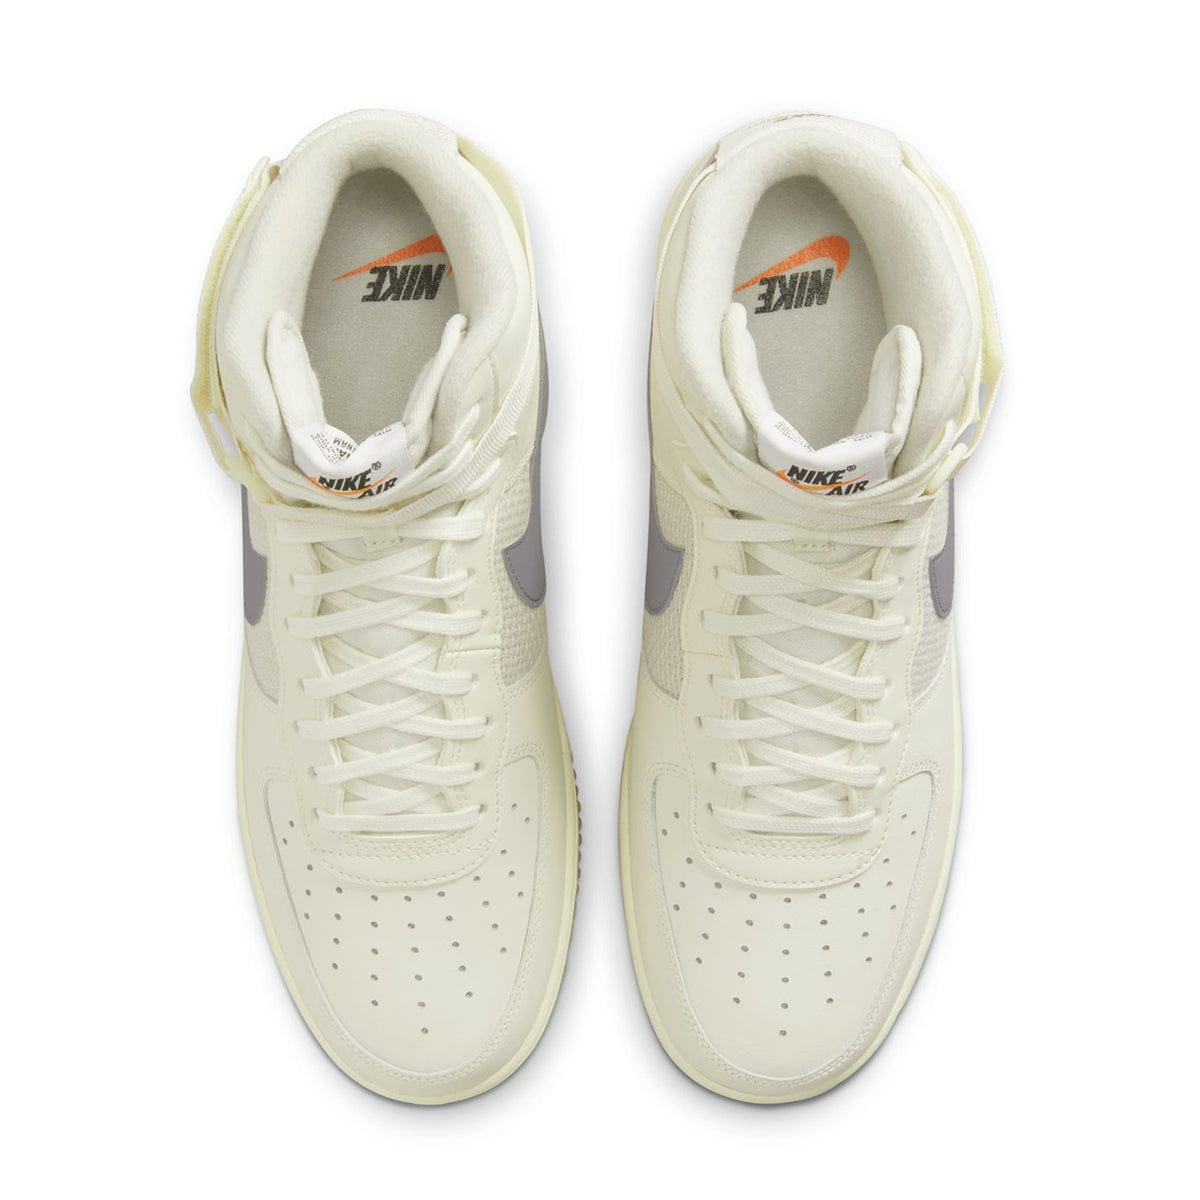 Nike Air Force 1 High '07 LV8 sneakers, Grey